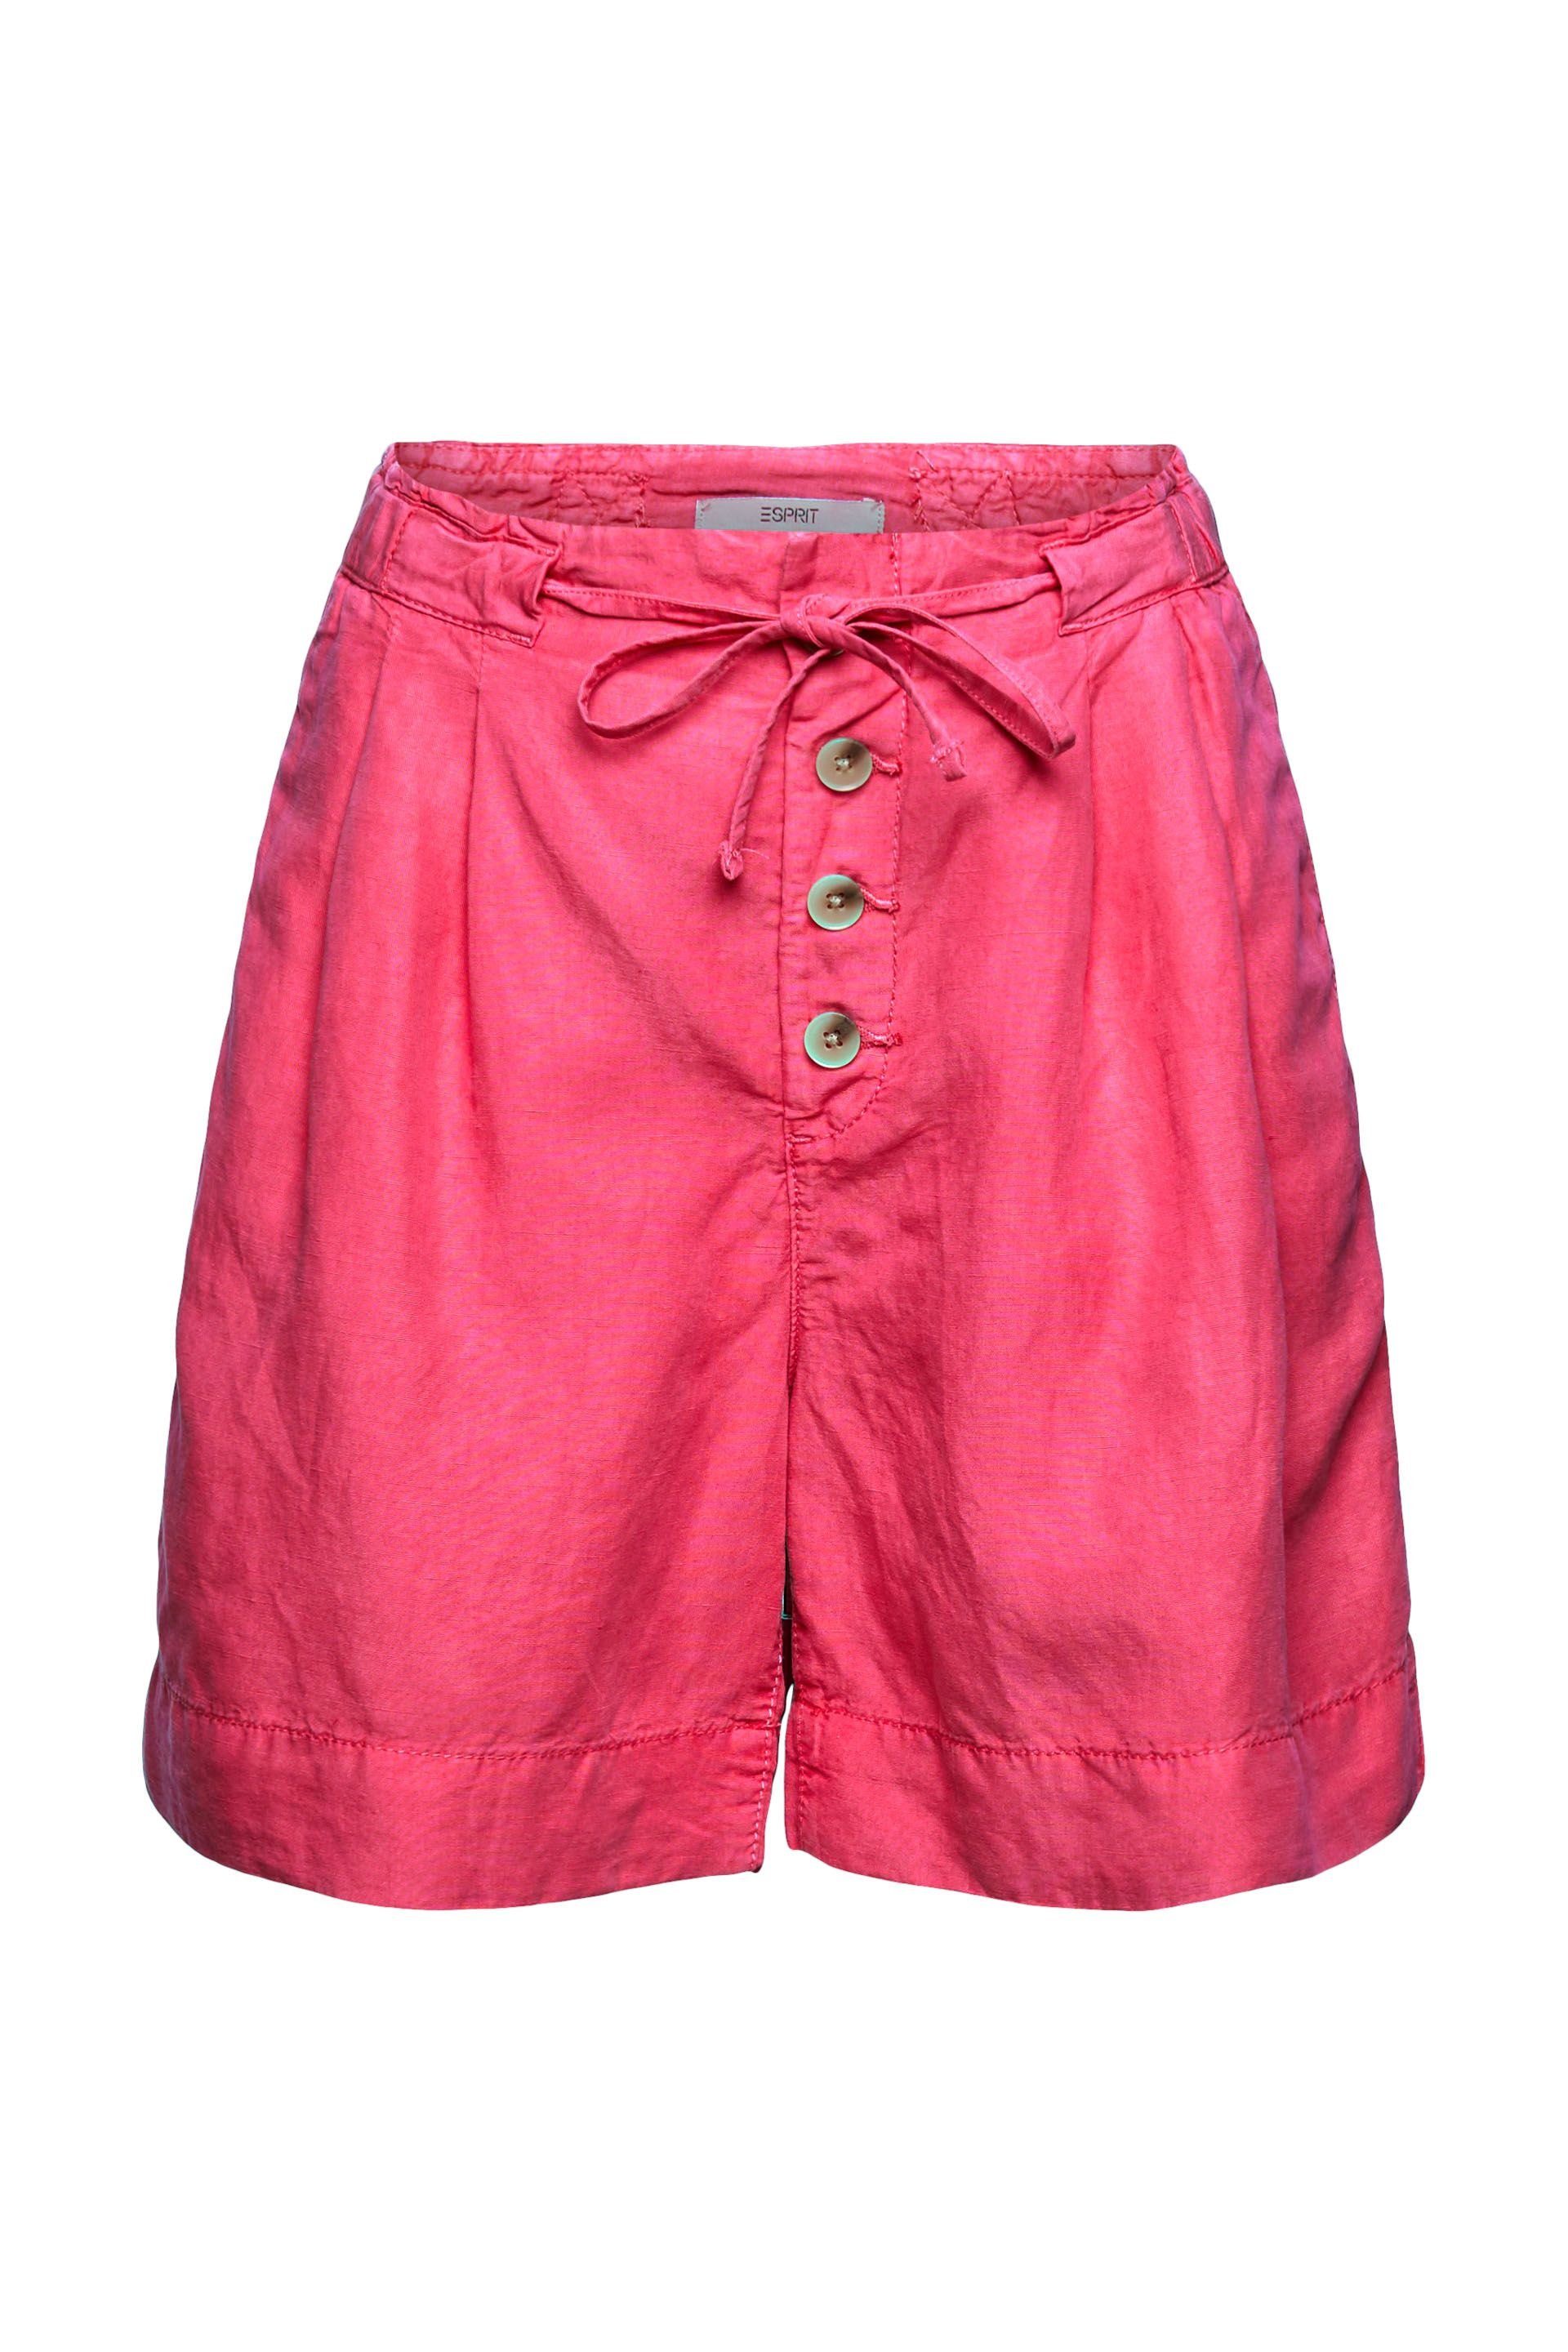 Esprit Shorts pink fuchsia | Shorts